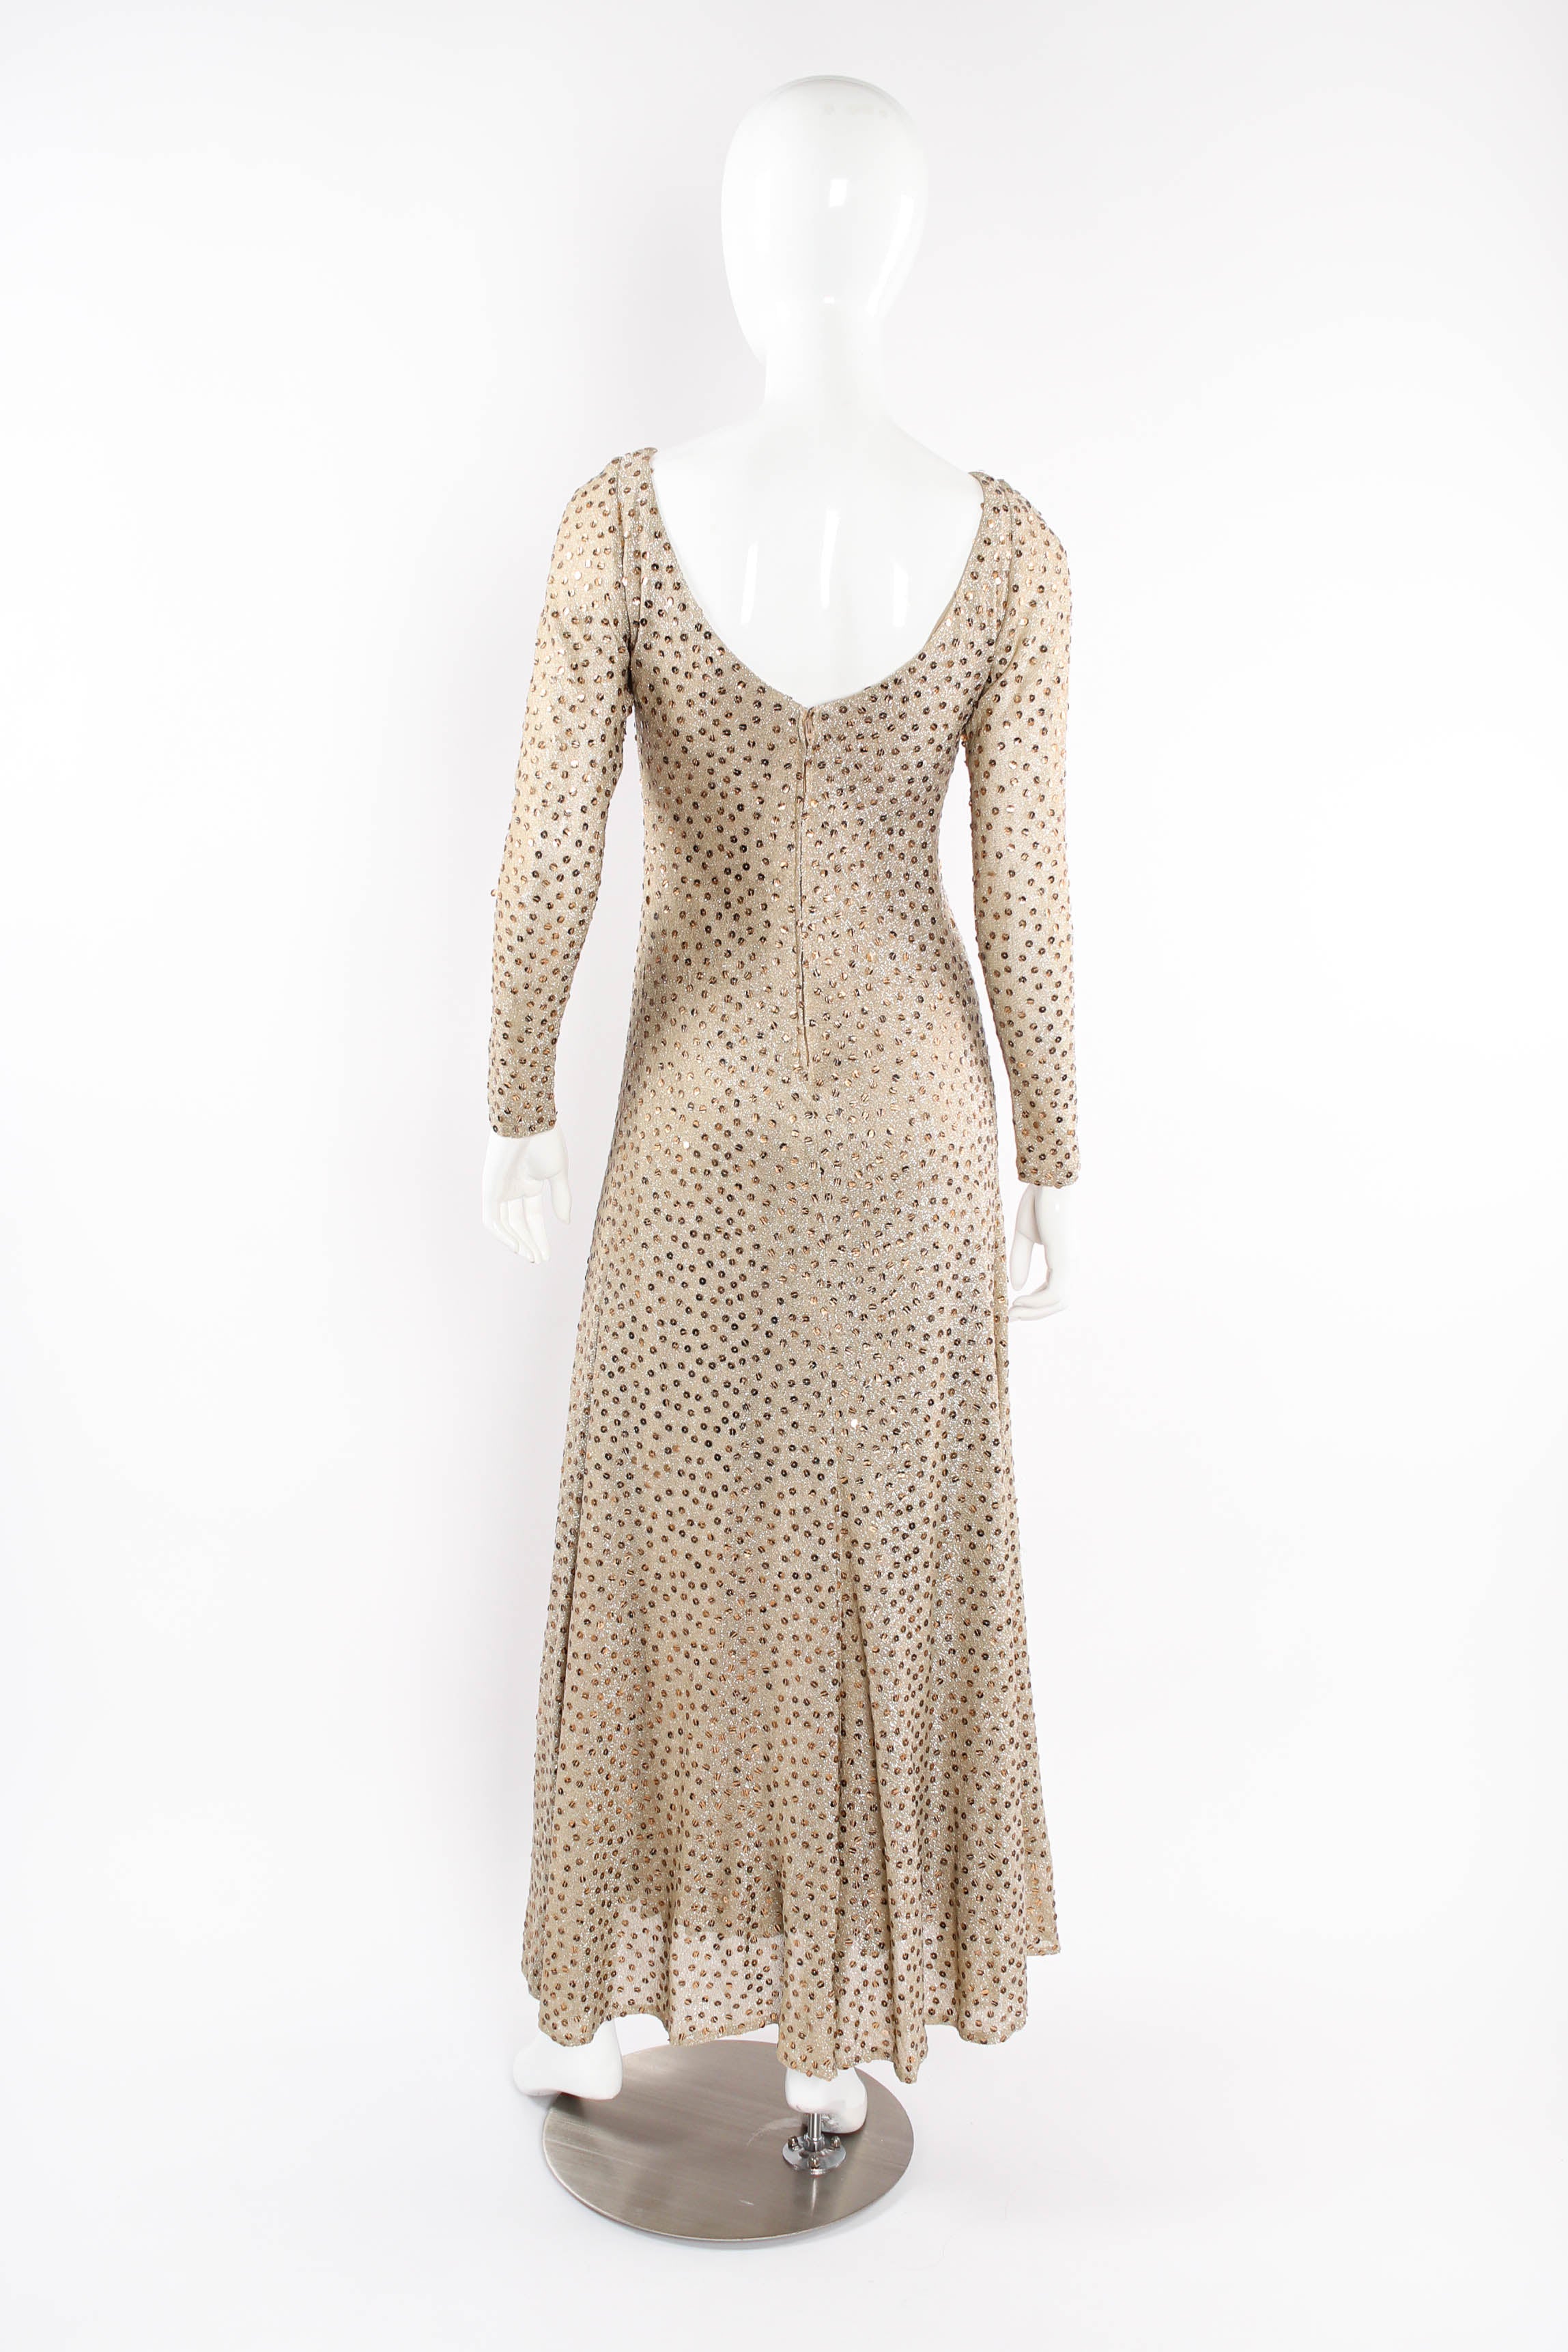 Vintage Mollie Parnis Zebrawood Sequined Metallic Midi Dress on mannequin back at Recess LA